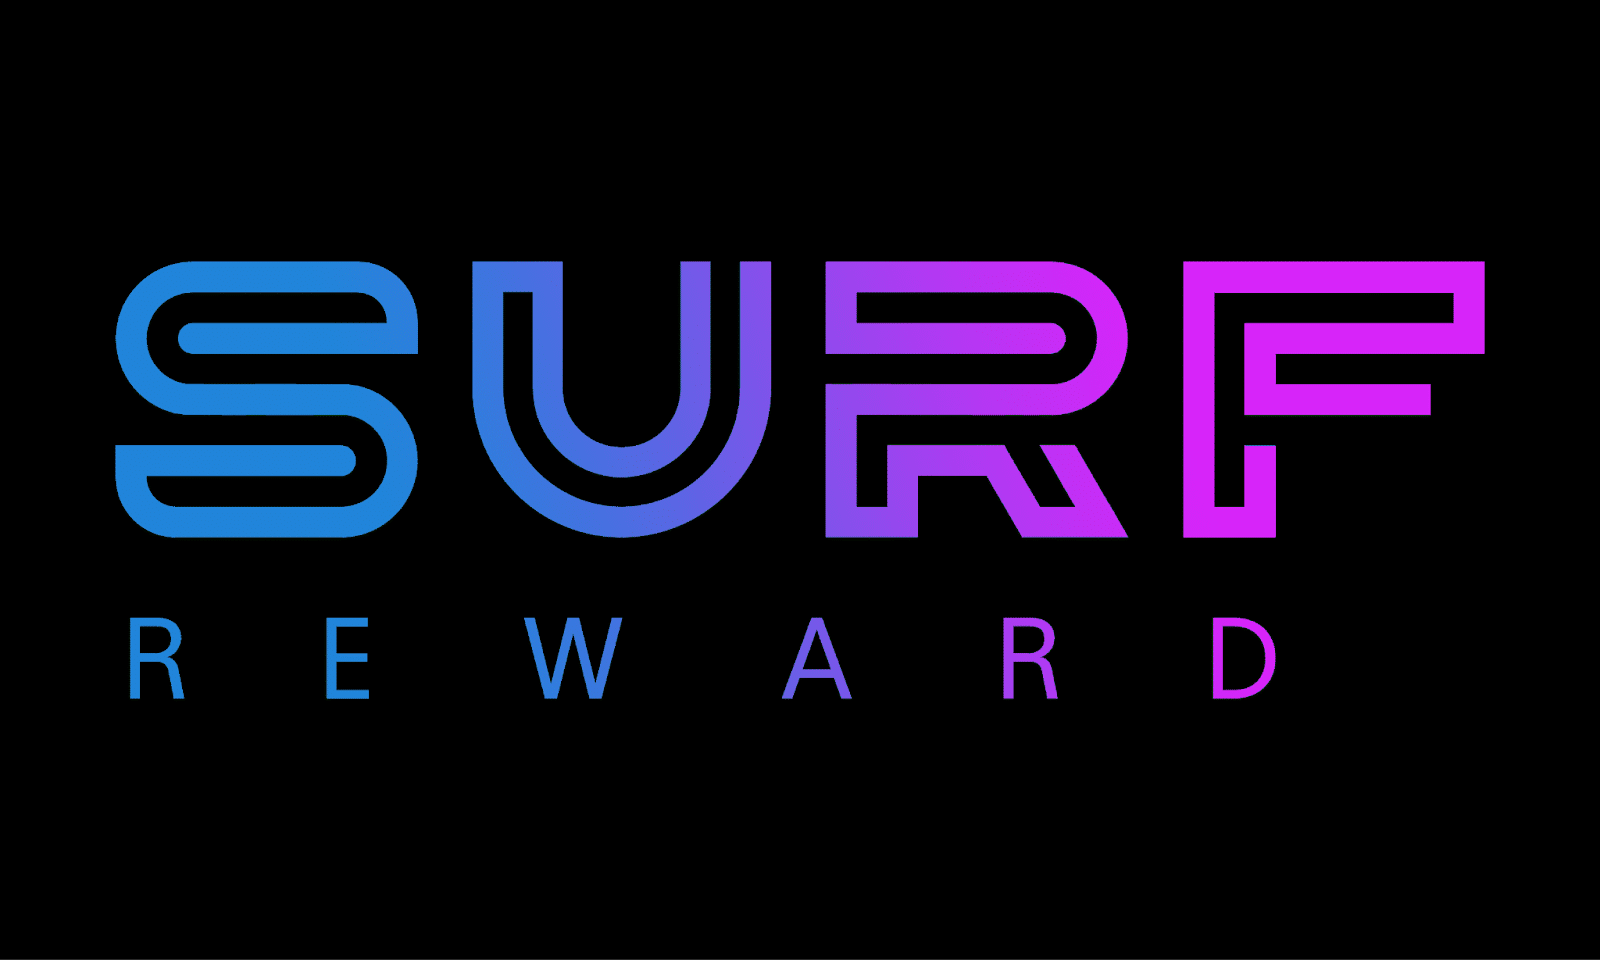 How to Buy SURF Reward